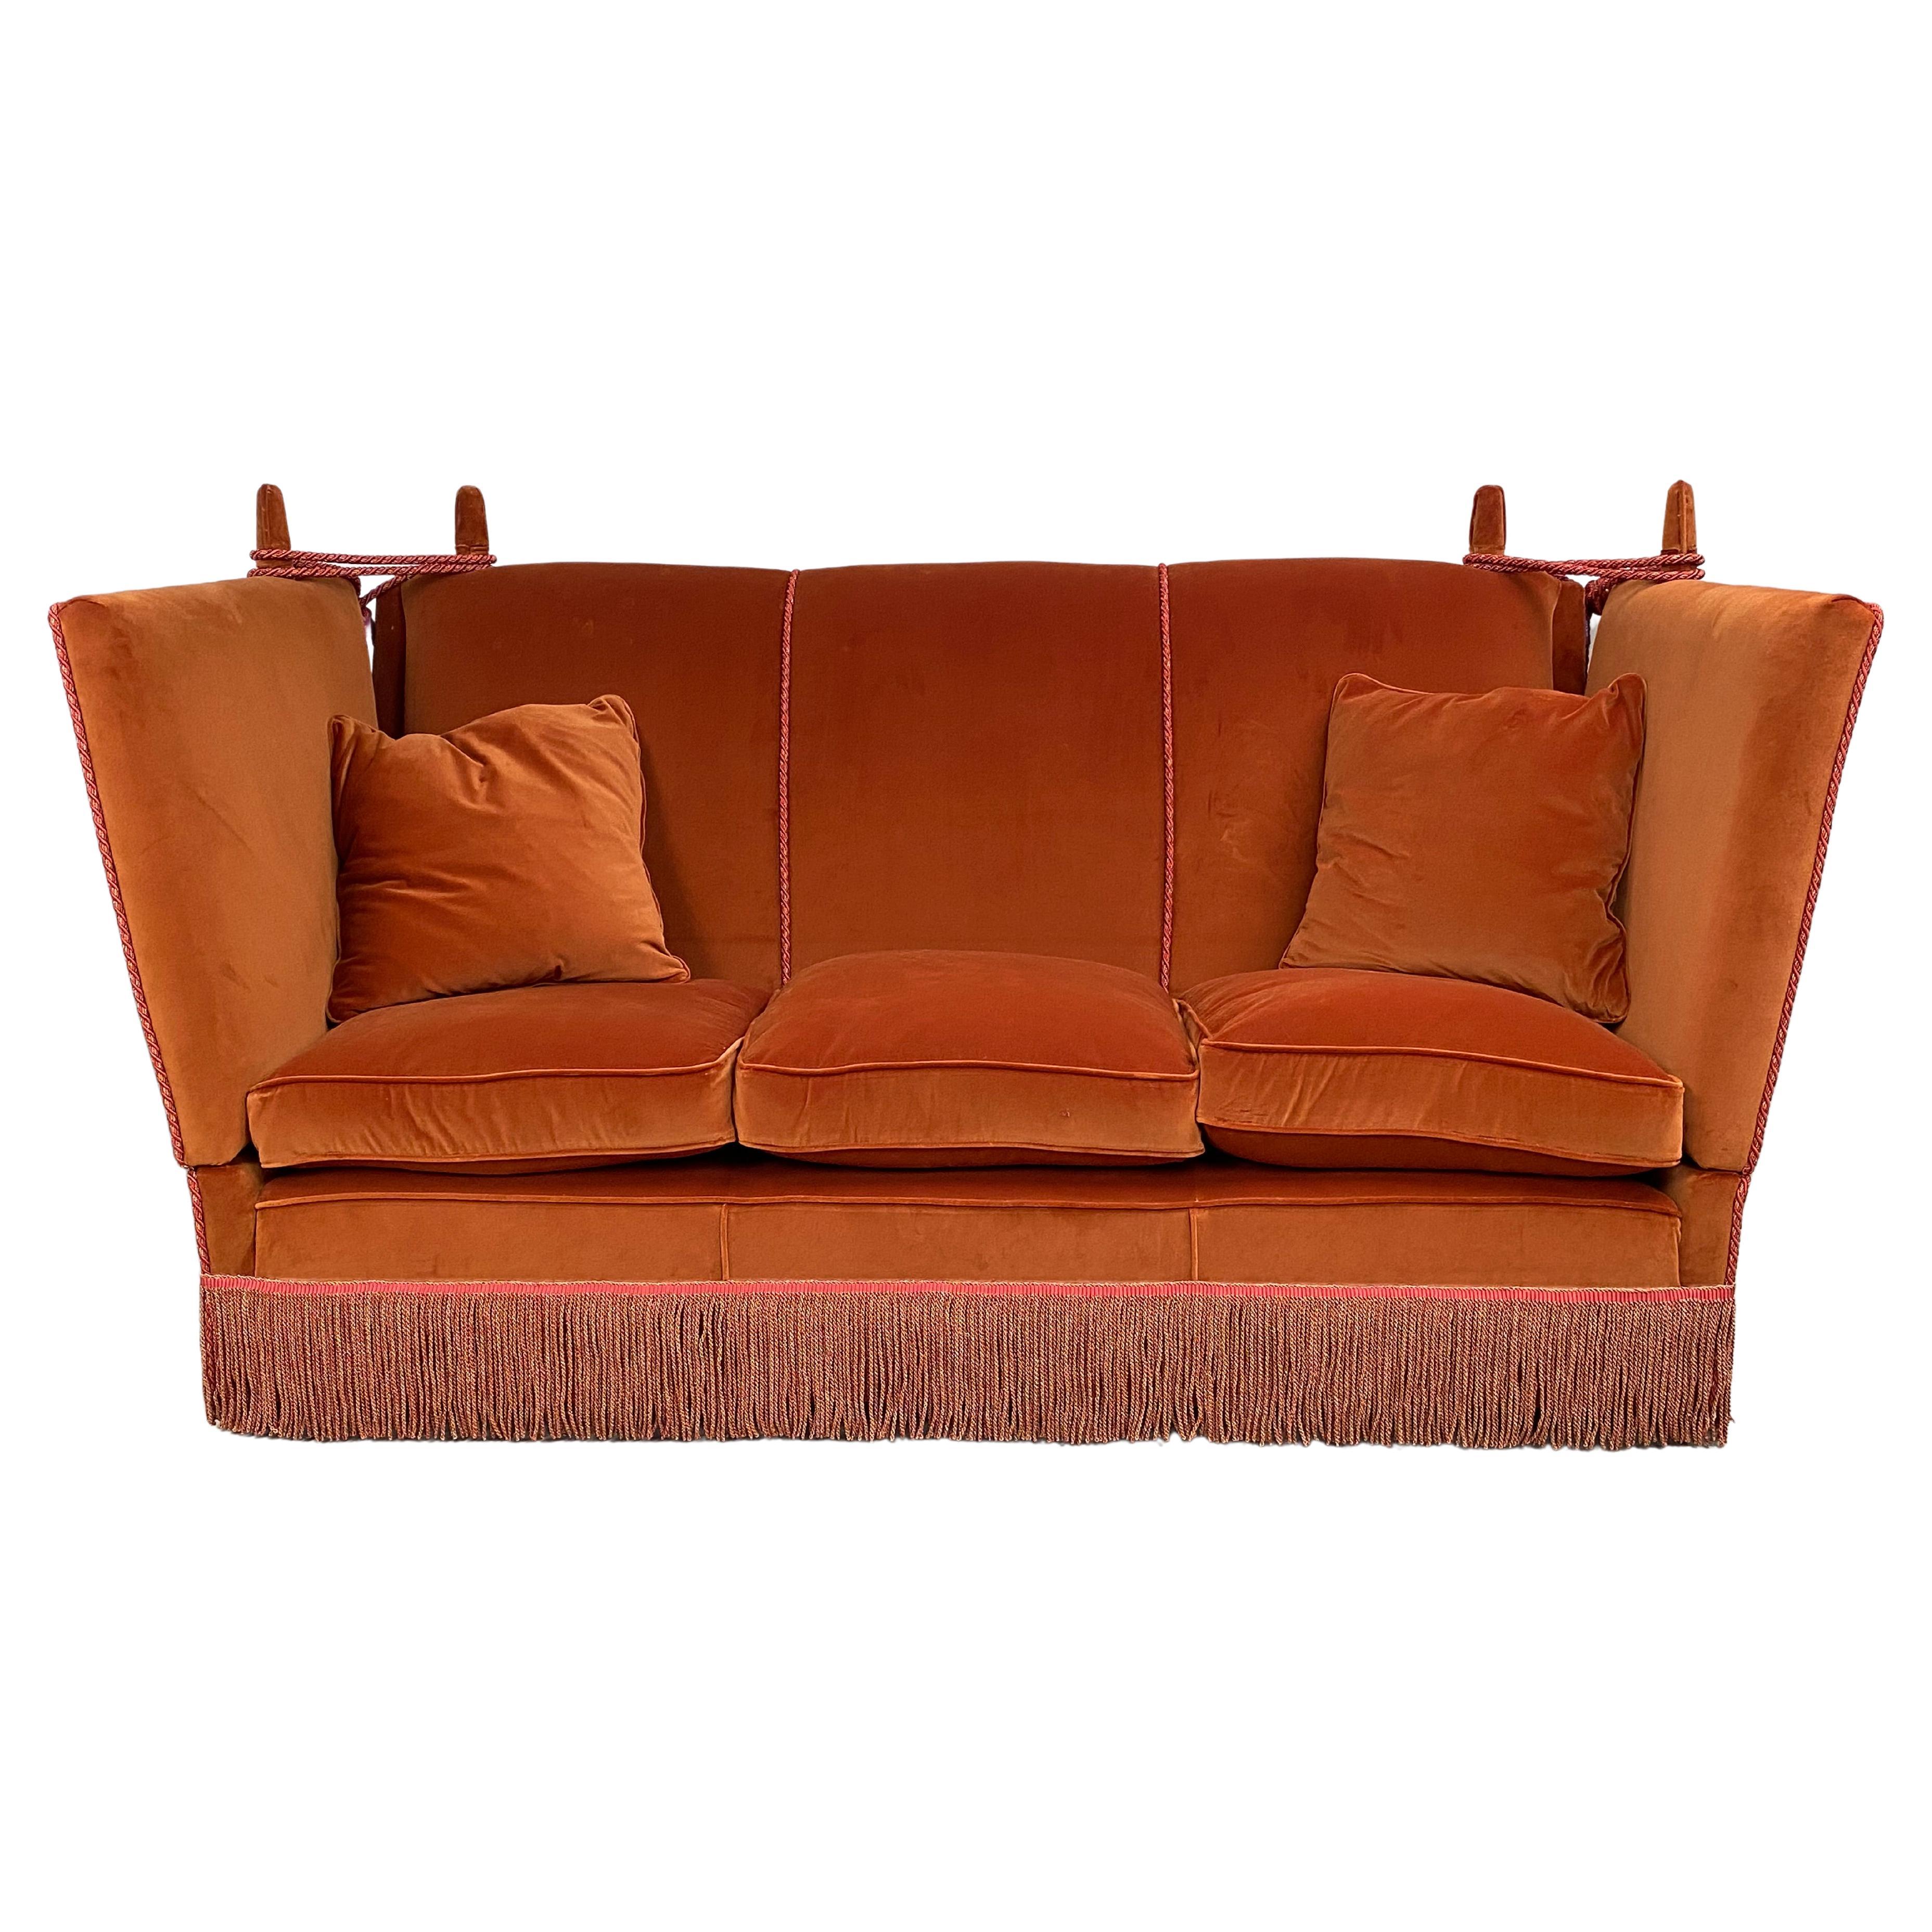 Mid Century Modern, 3 seater Knoll Drop Arm Sofa in velvet orange, England. For Sale